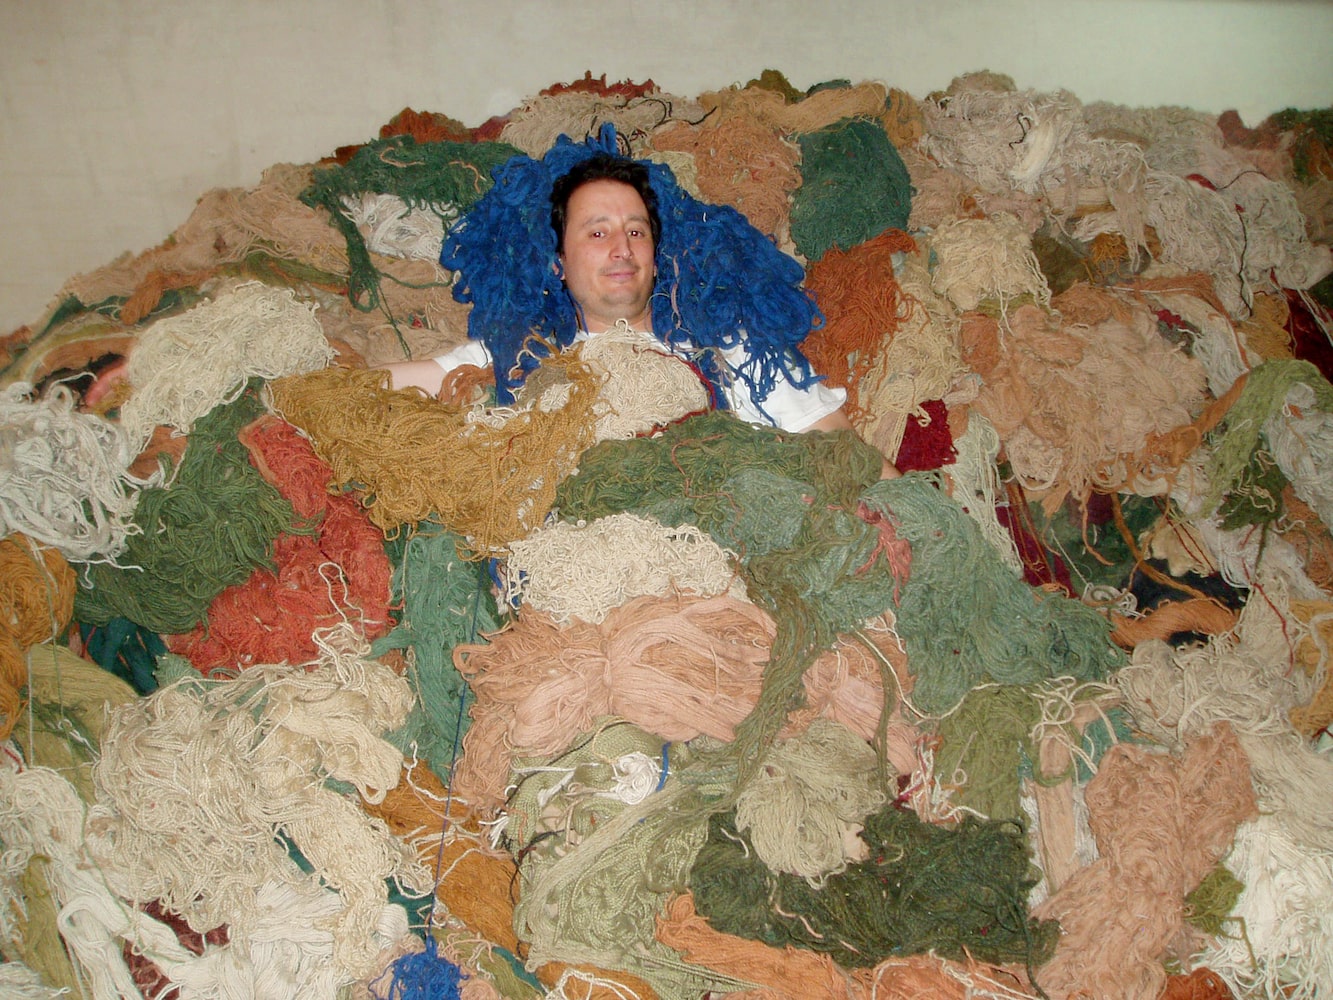 wool fibers for making rugs